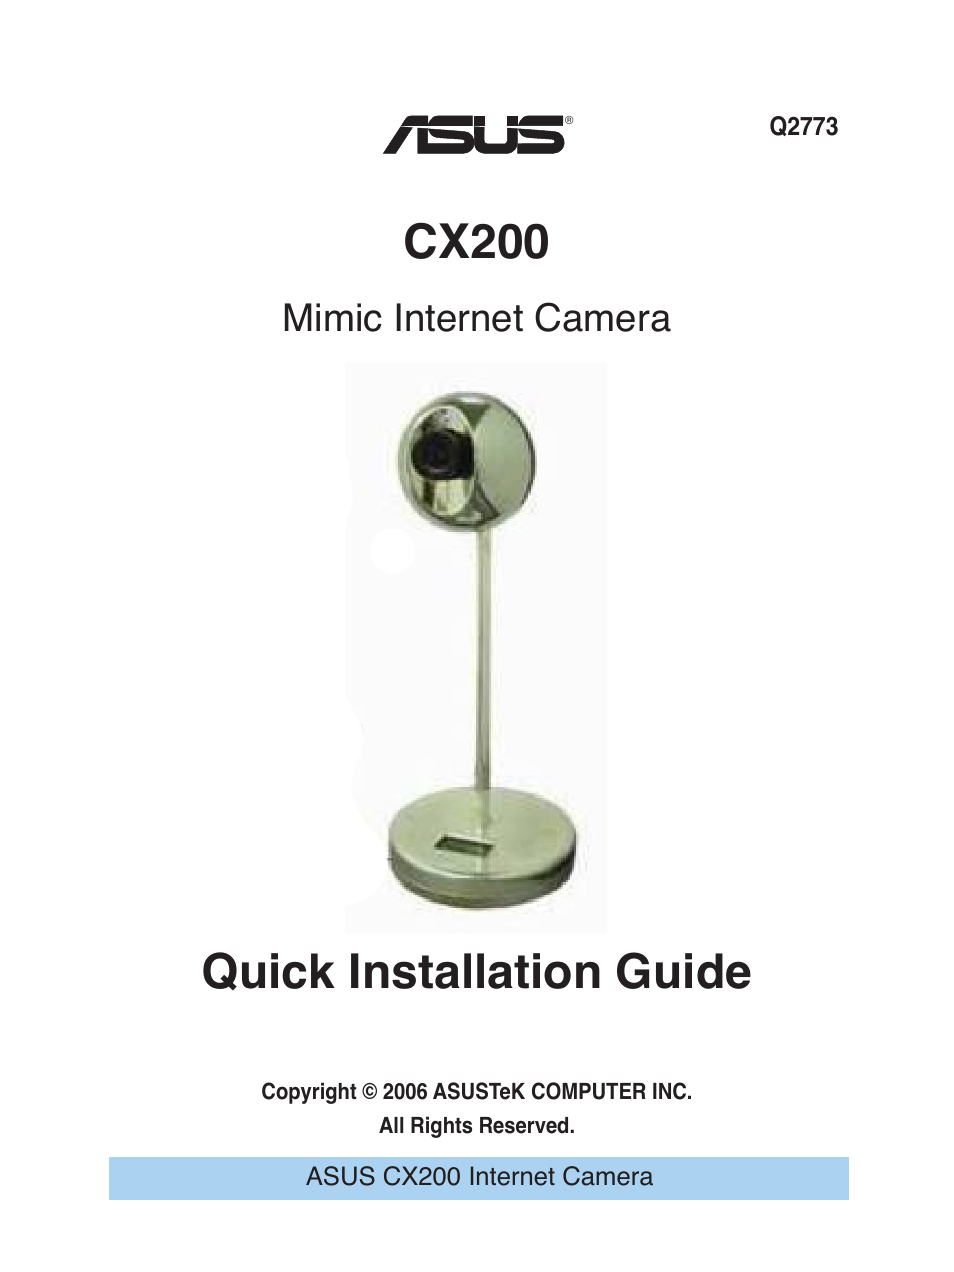 Mimic Internet Camera CX200